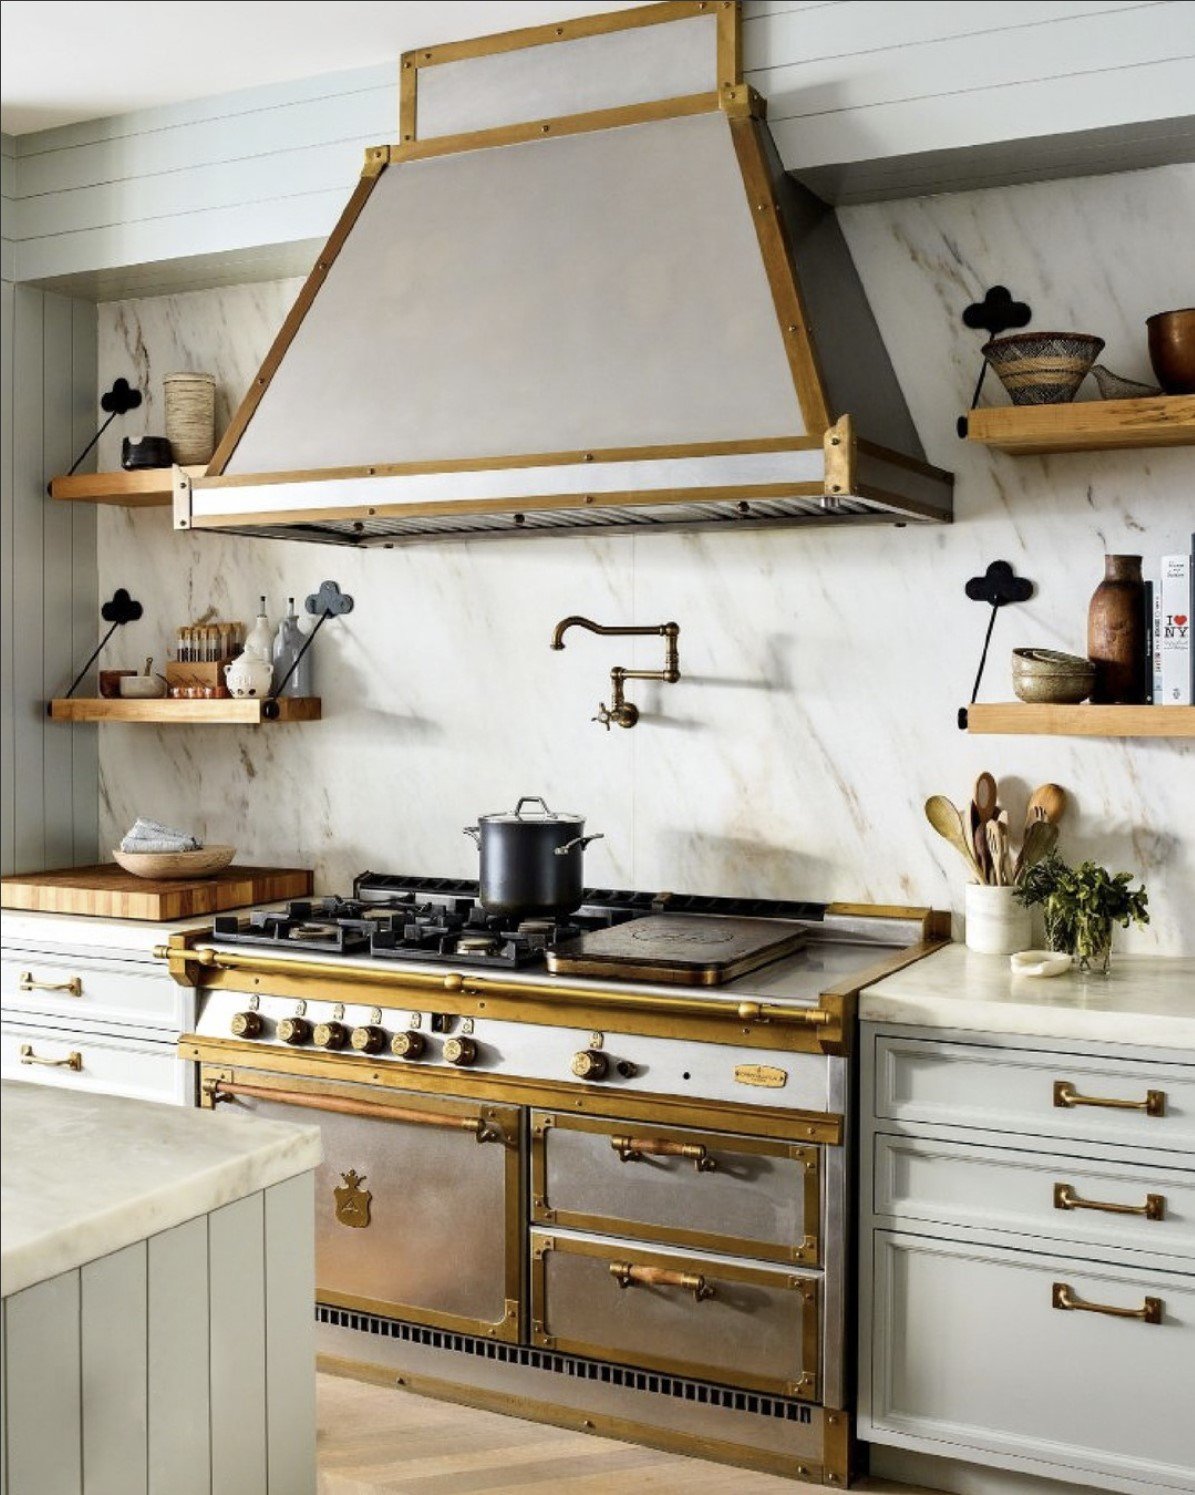 large italian range and hood in kitchen with marble backsplash and floating shelves